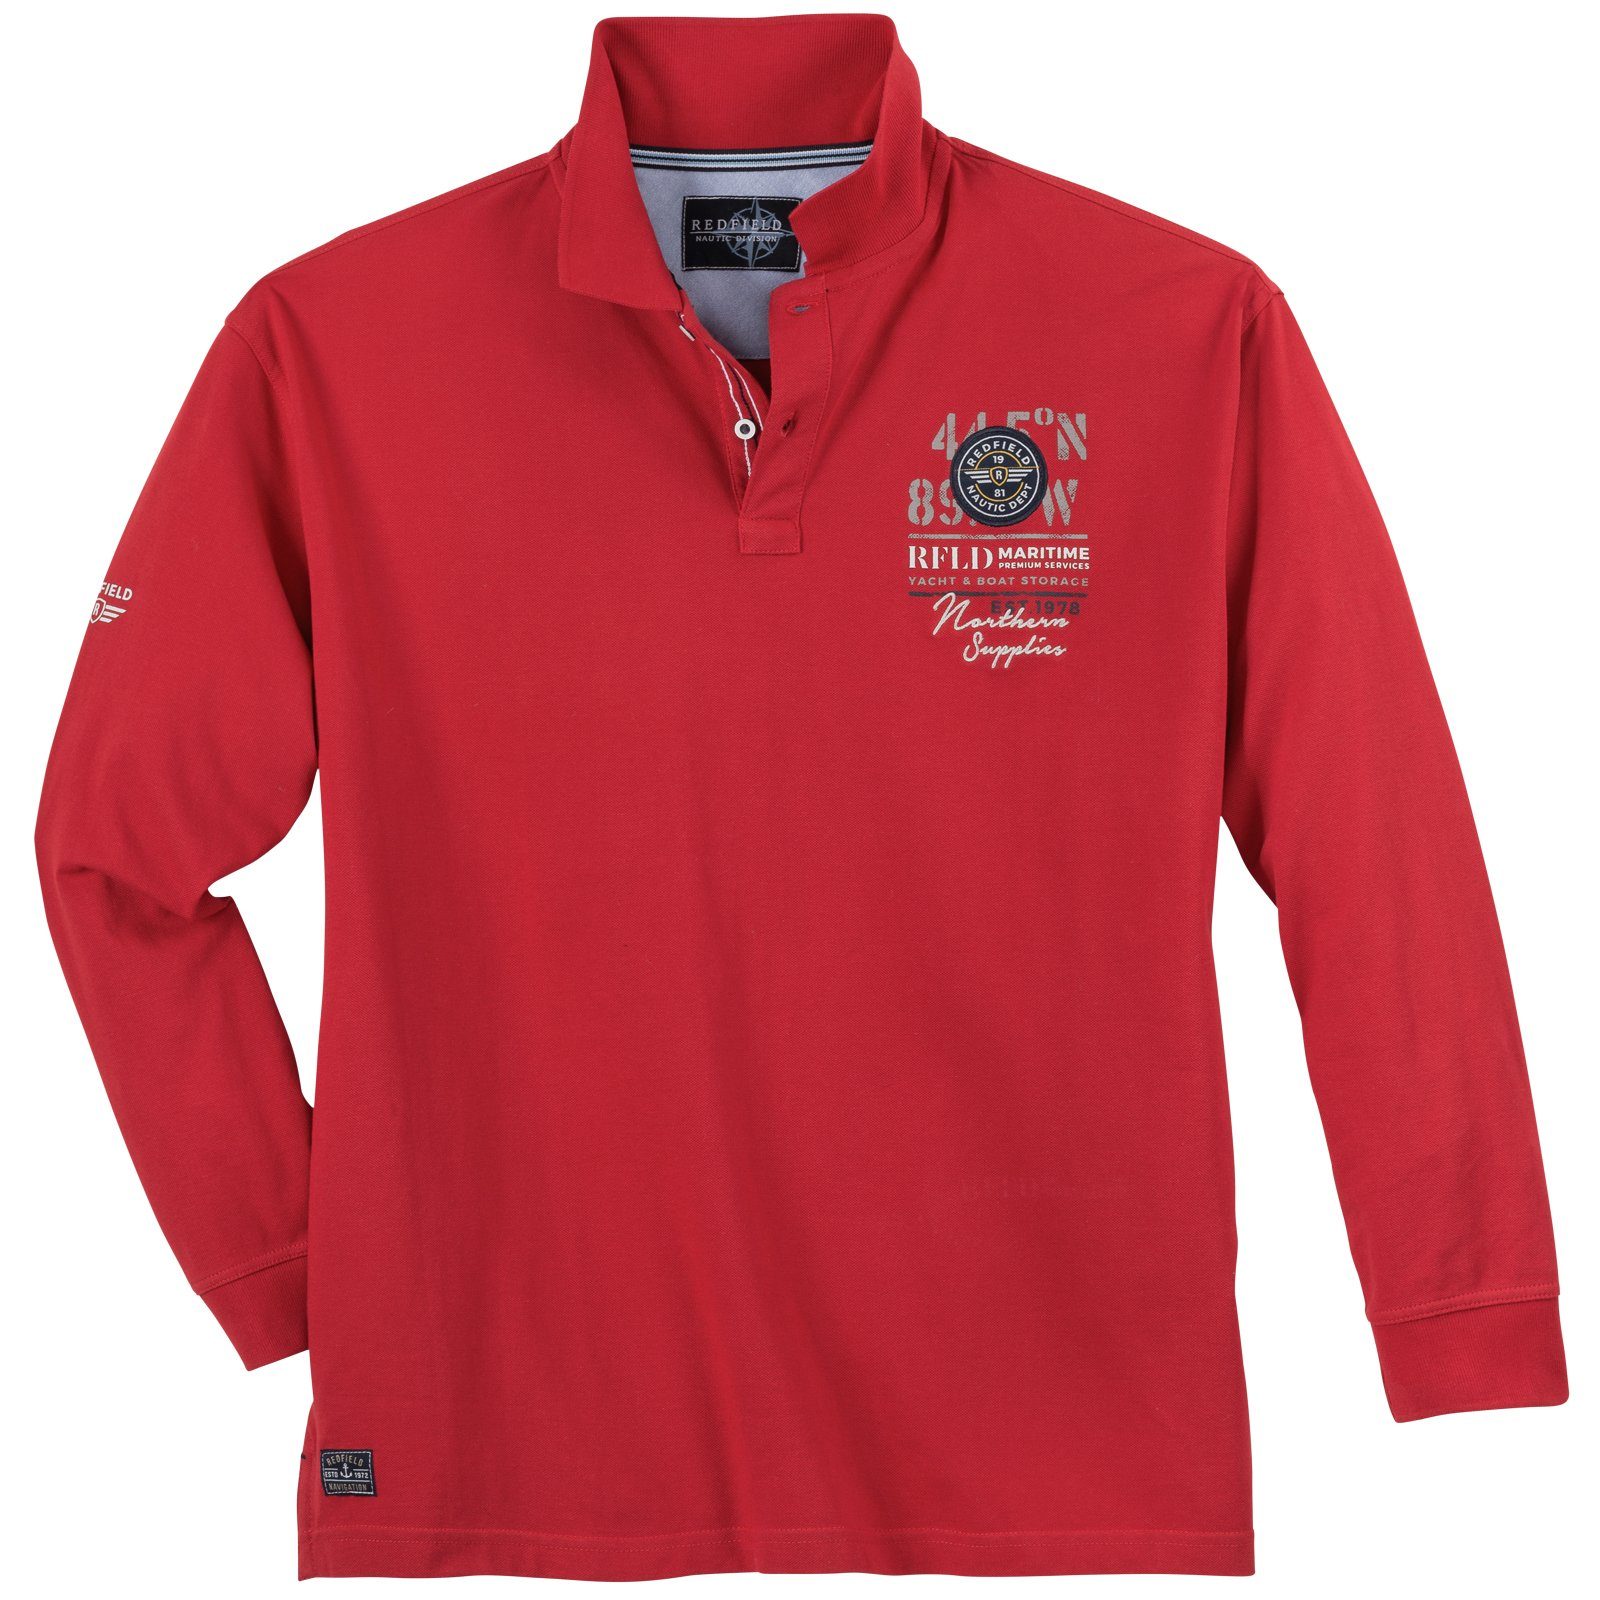 Größen Redfield Langarm-Poloshirt redfield maritim Herren Große Langarm-Poloshirt rot